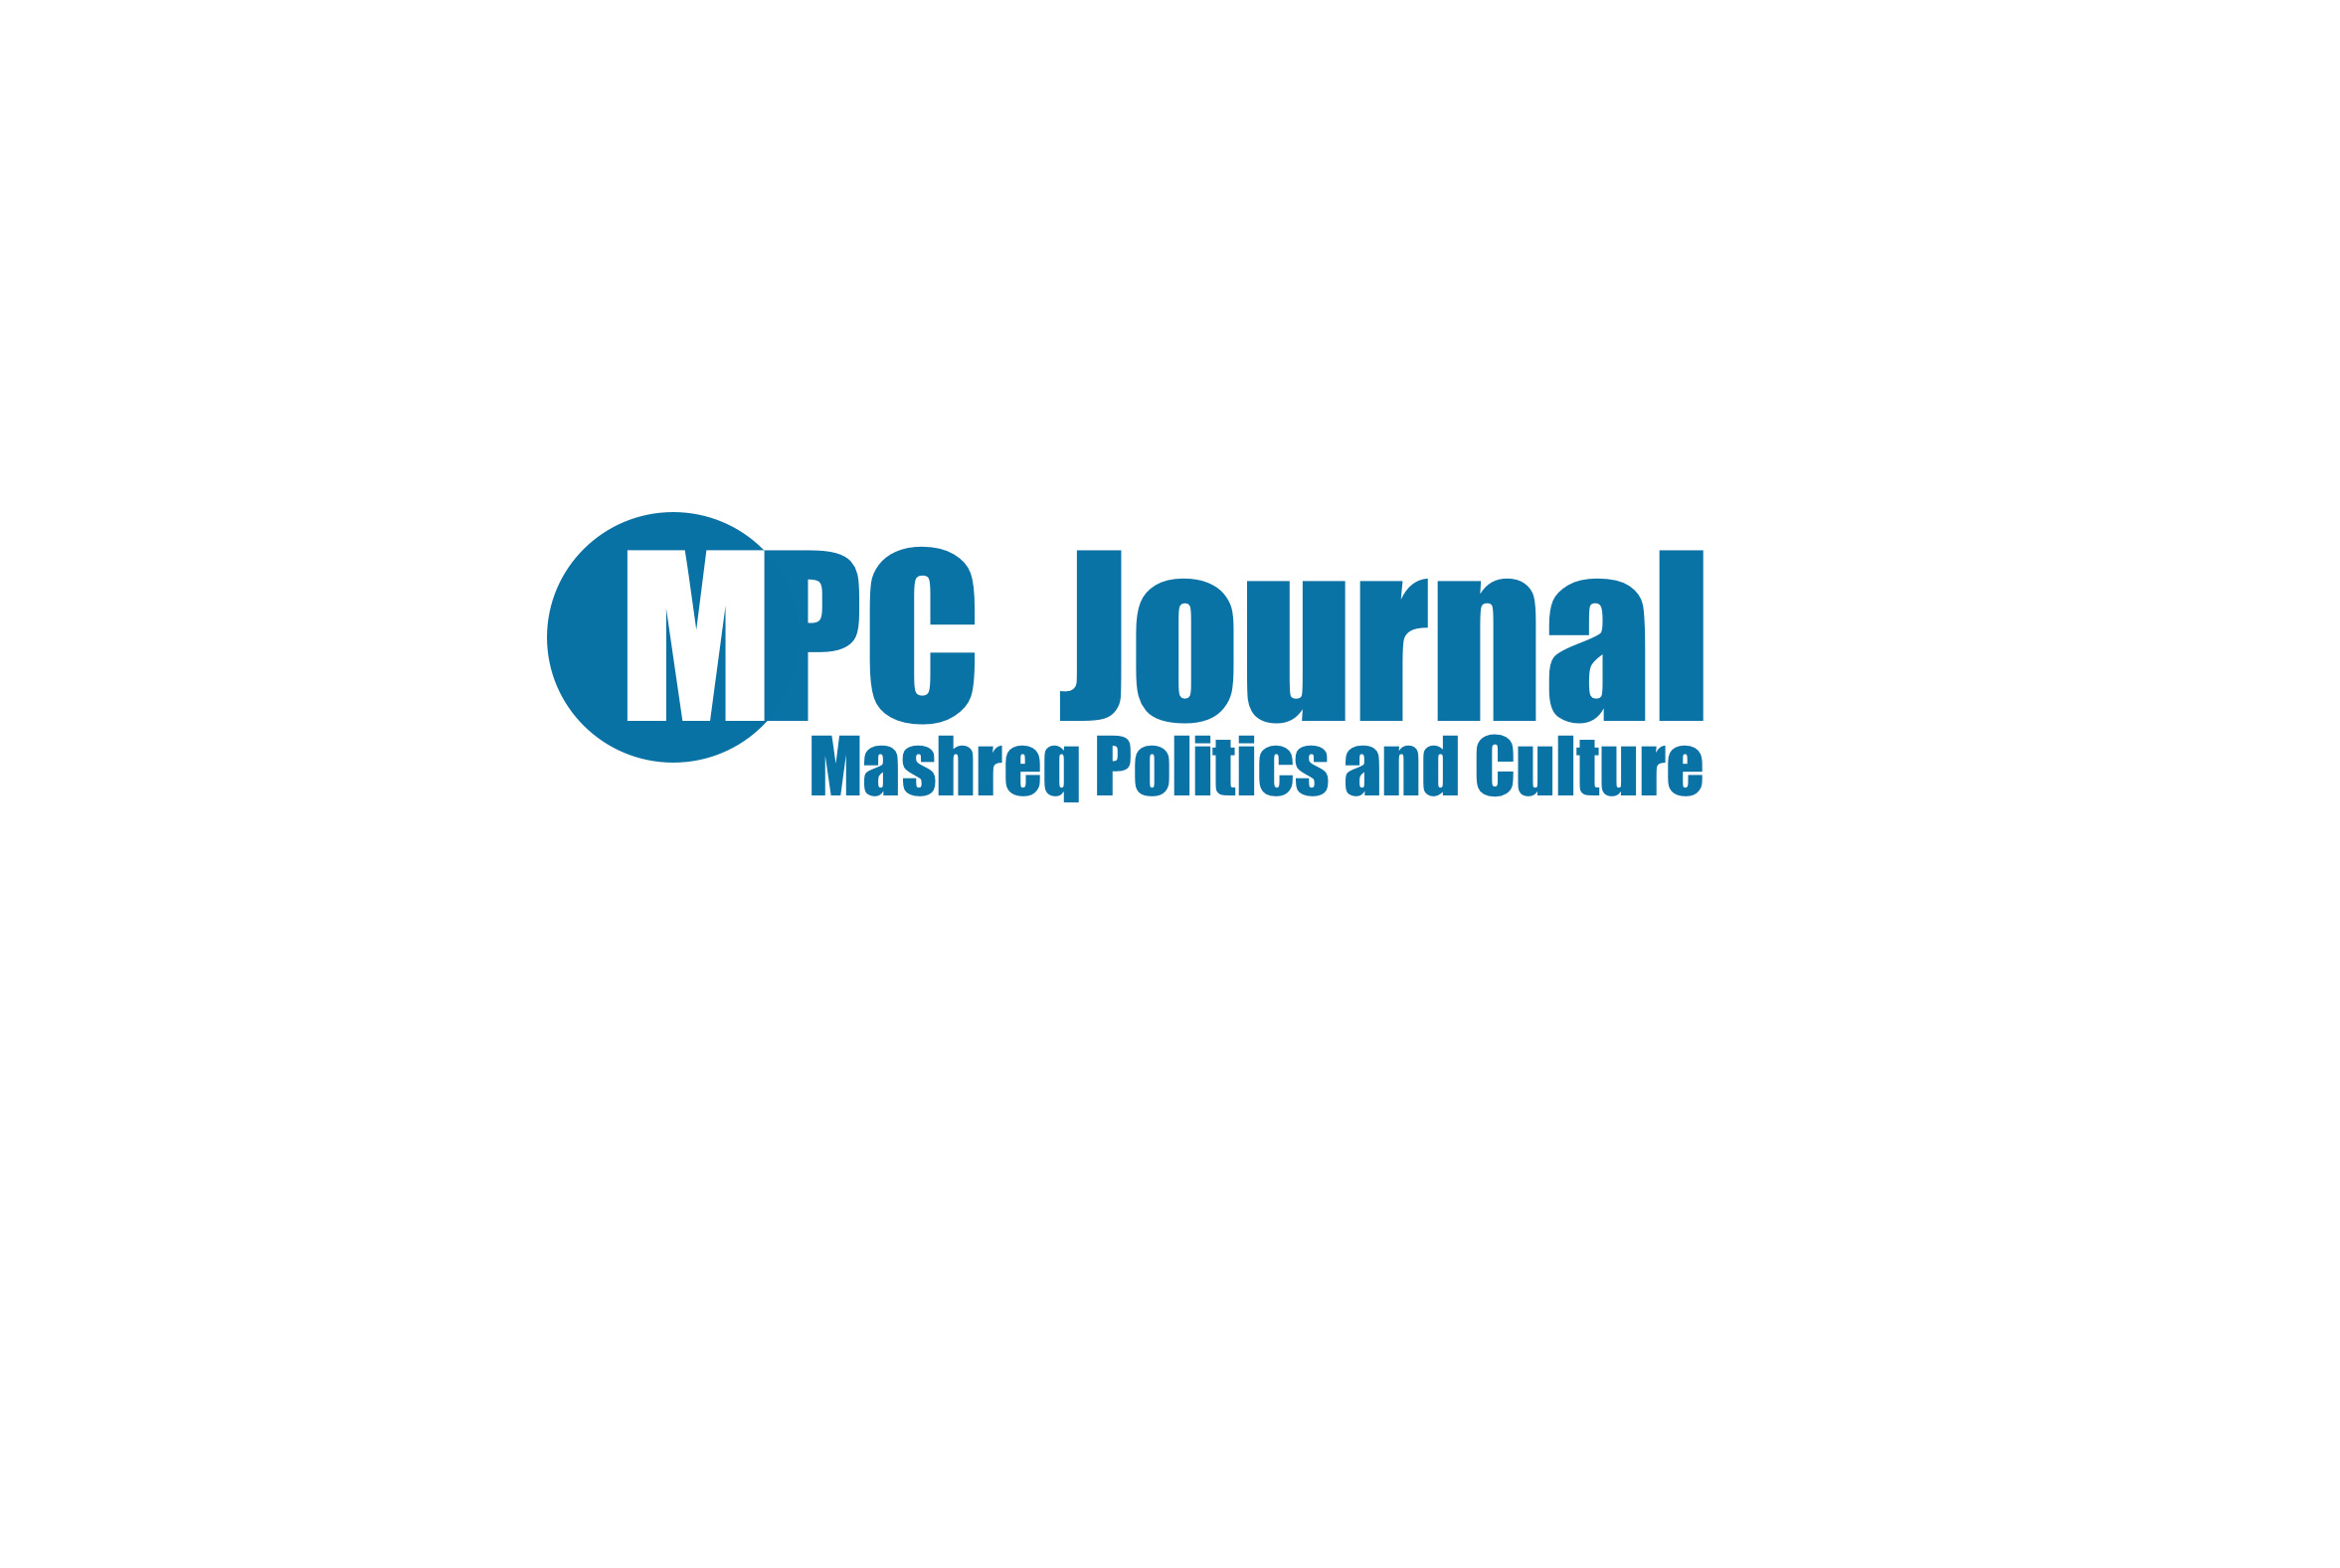 MPC JOURNAL - Mashreq Politics and Culture, Hakim Khatib